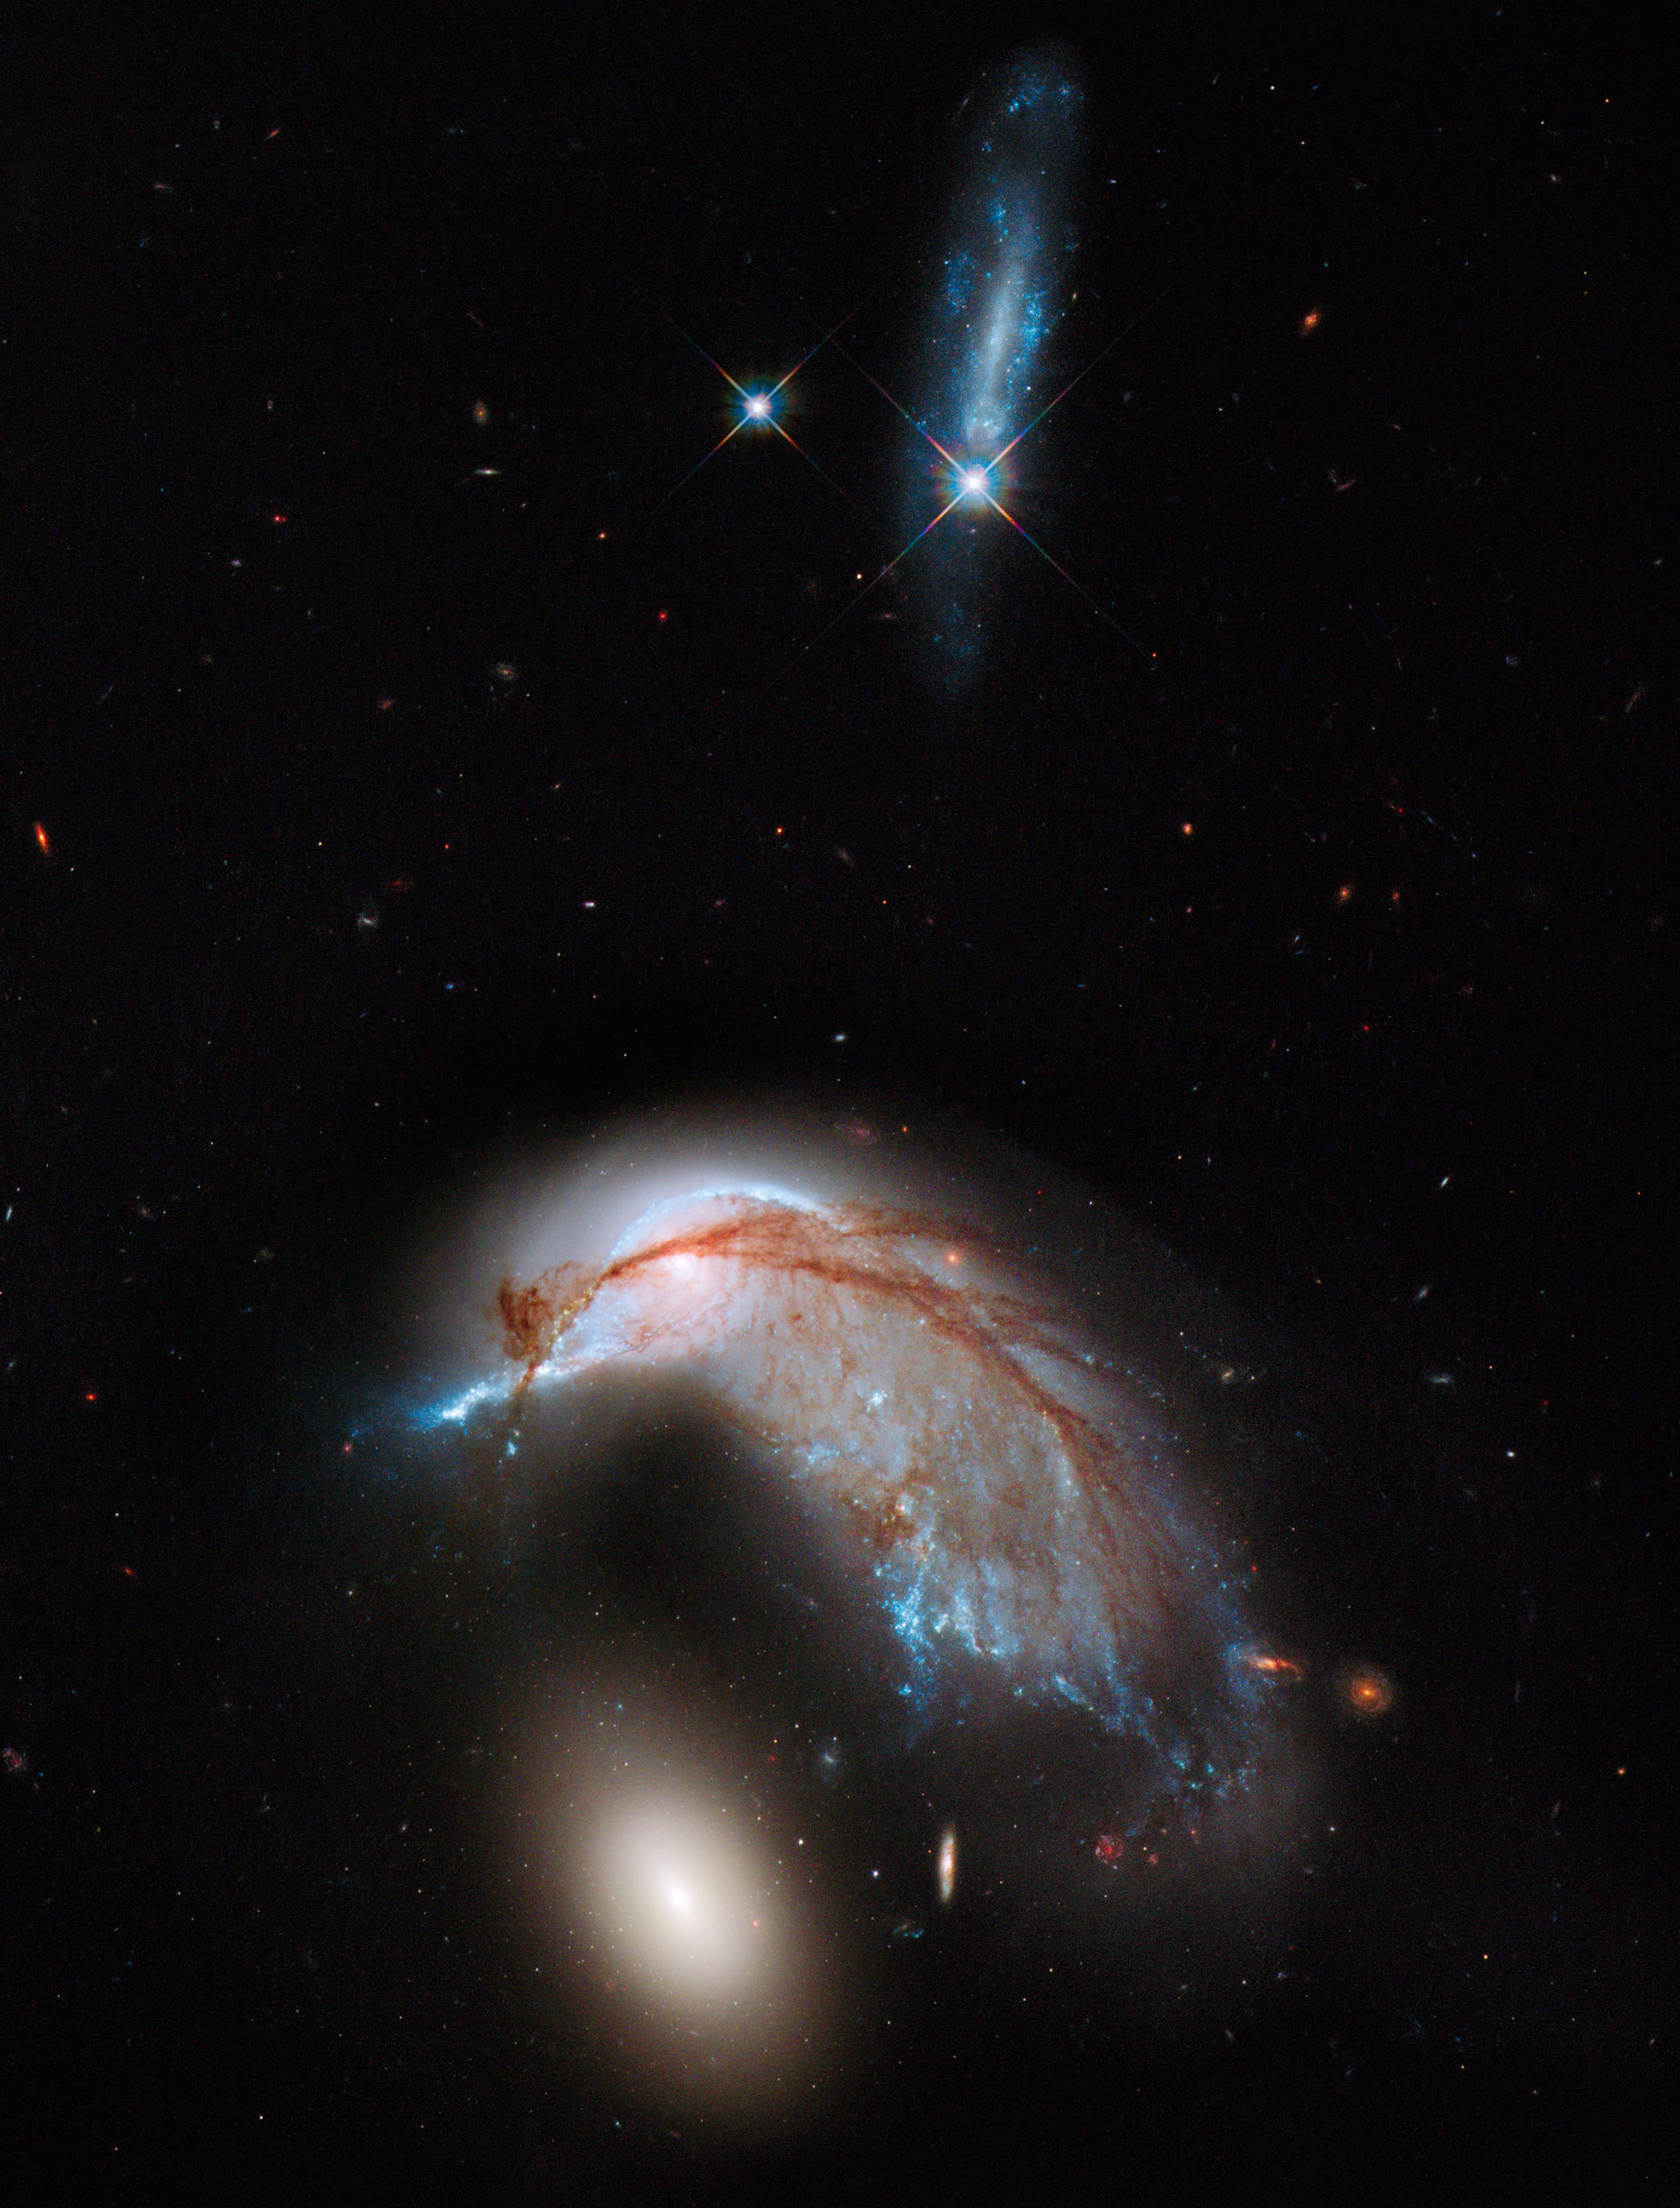 Hubble Views Interacting Galaxy Duo Arp 142